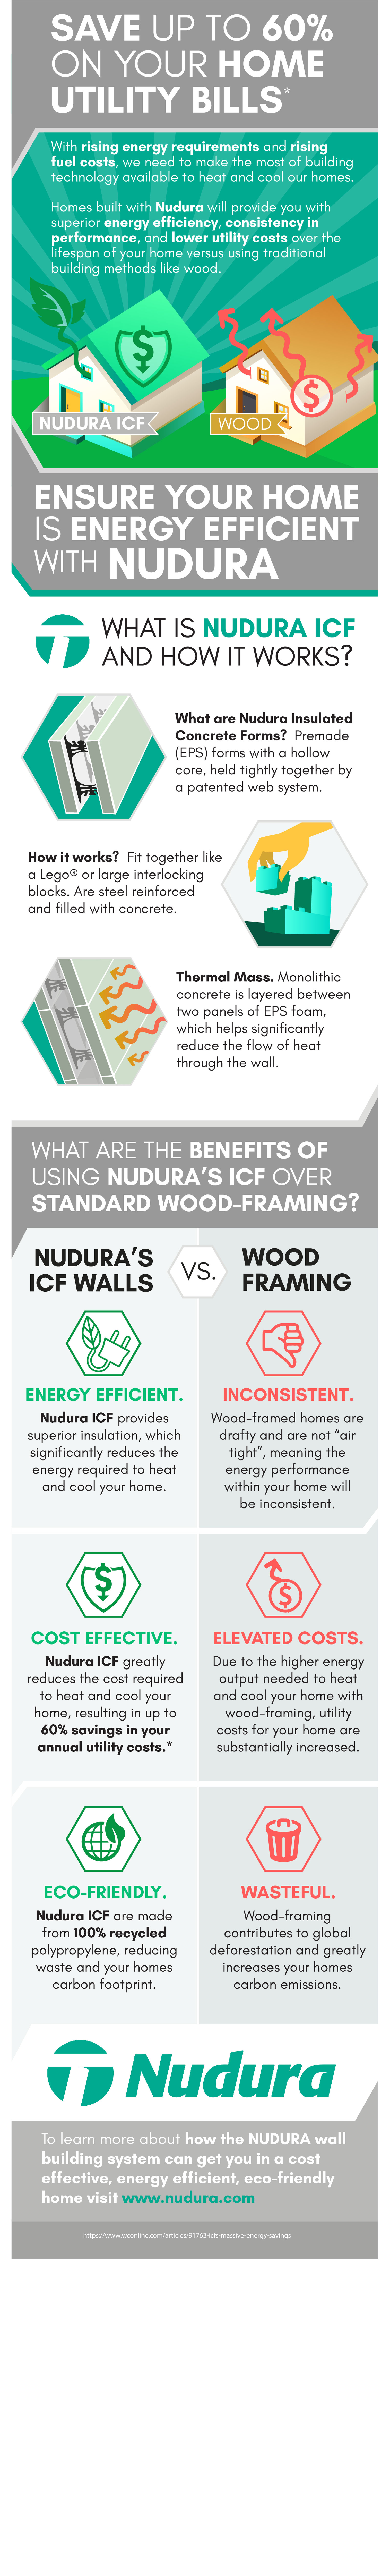 Nudura ICF Energy Efficiency Infographic